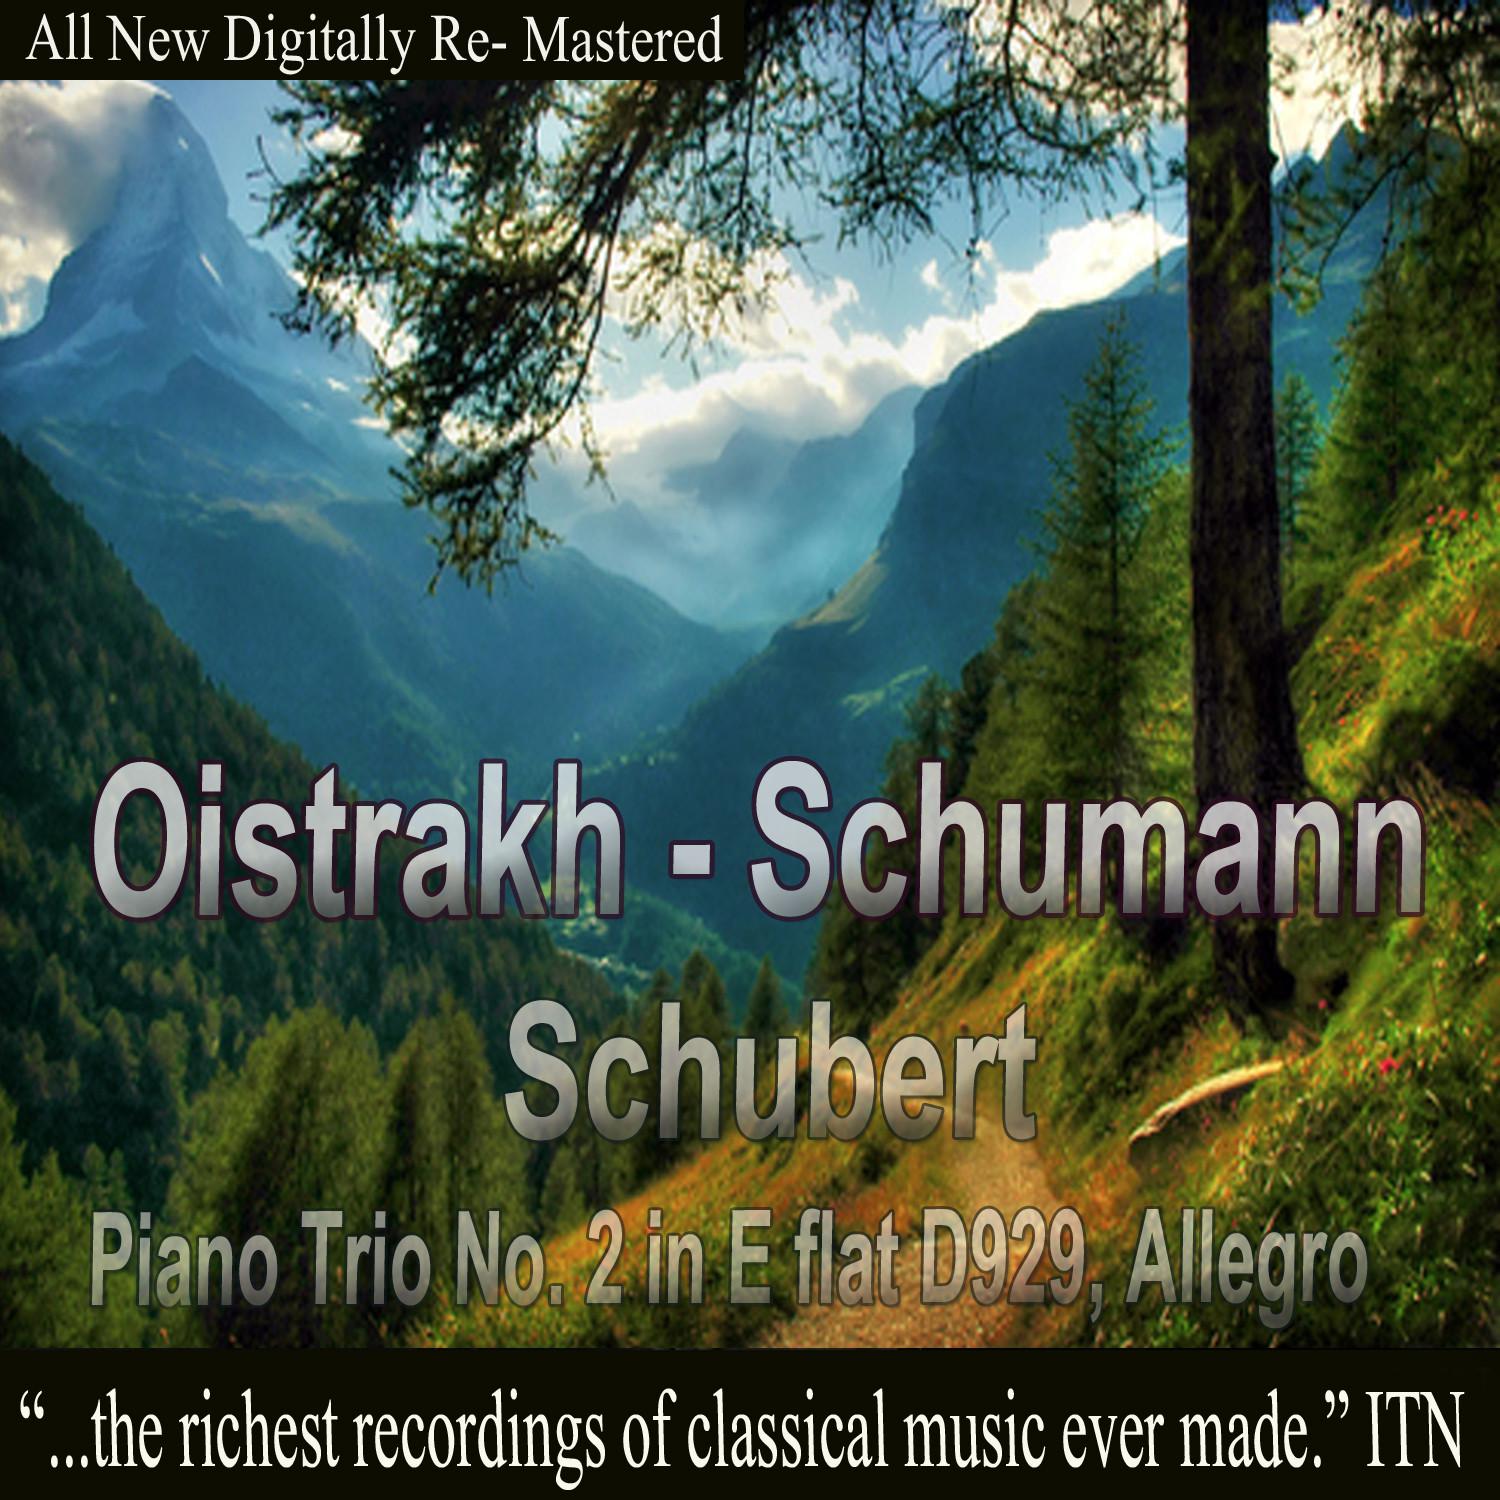 Oistrakh - Schumann, Schubert, Piano Trio No. 2 in E-Flat D929, Allegro